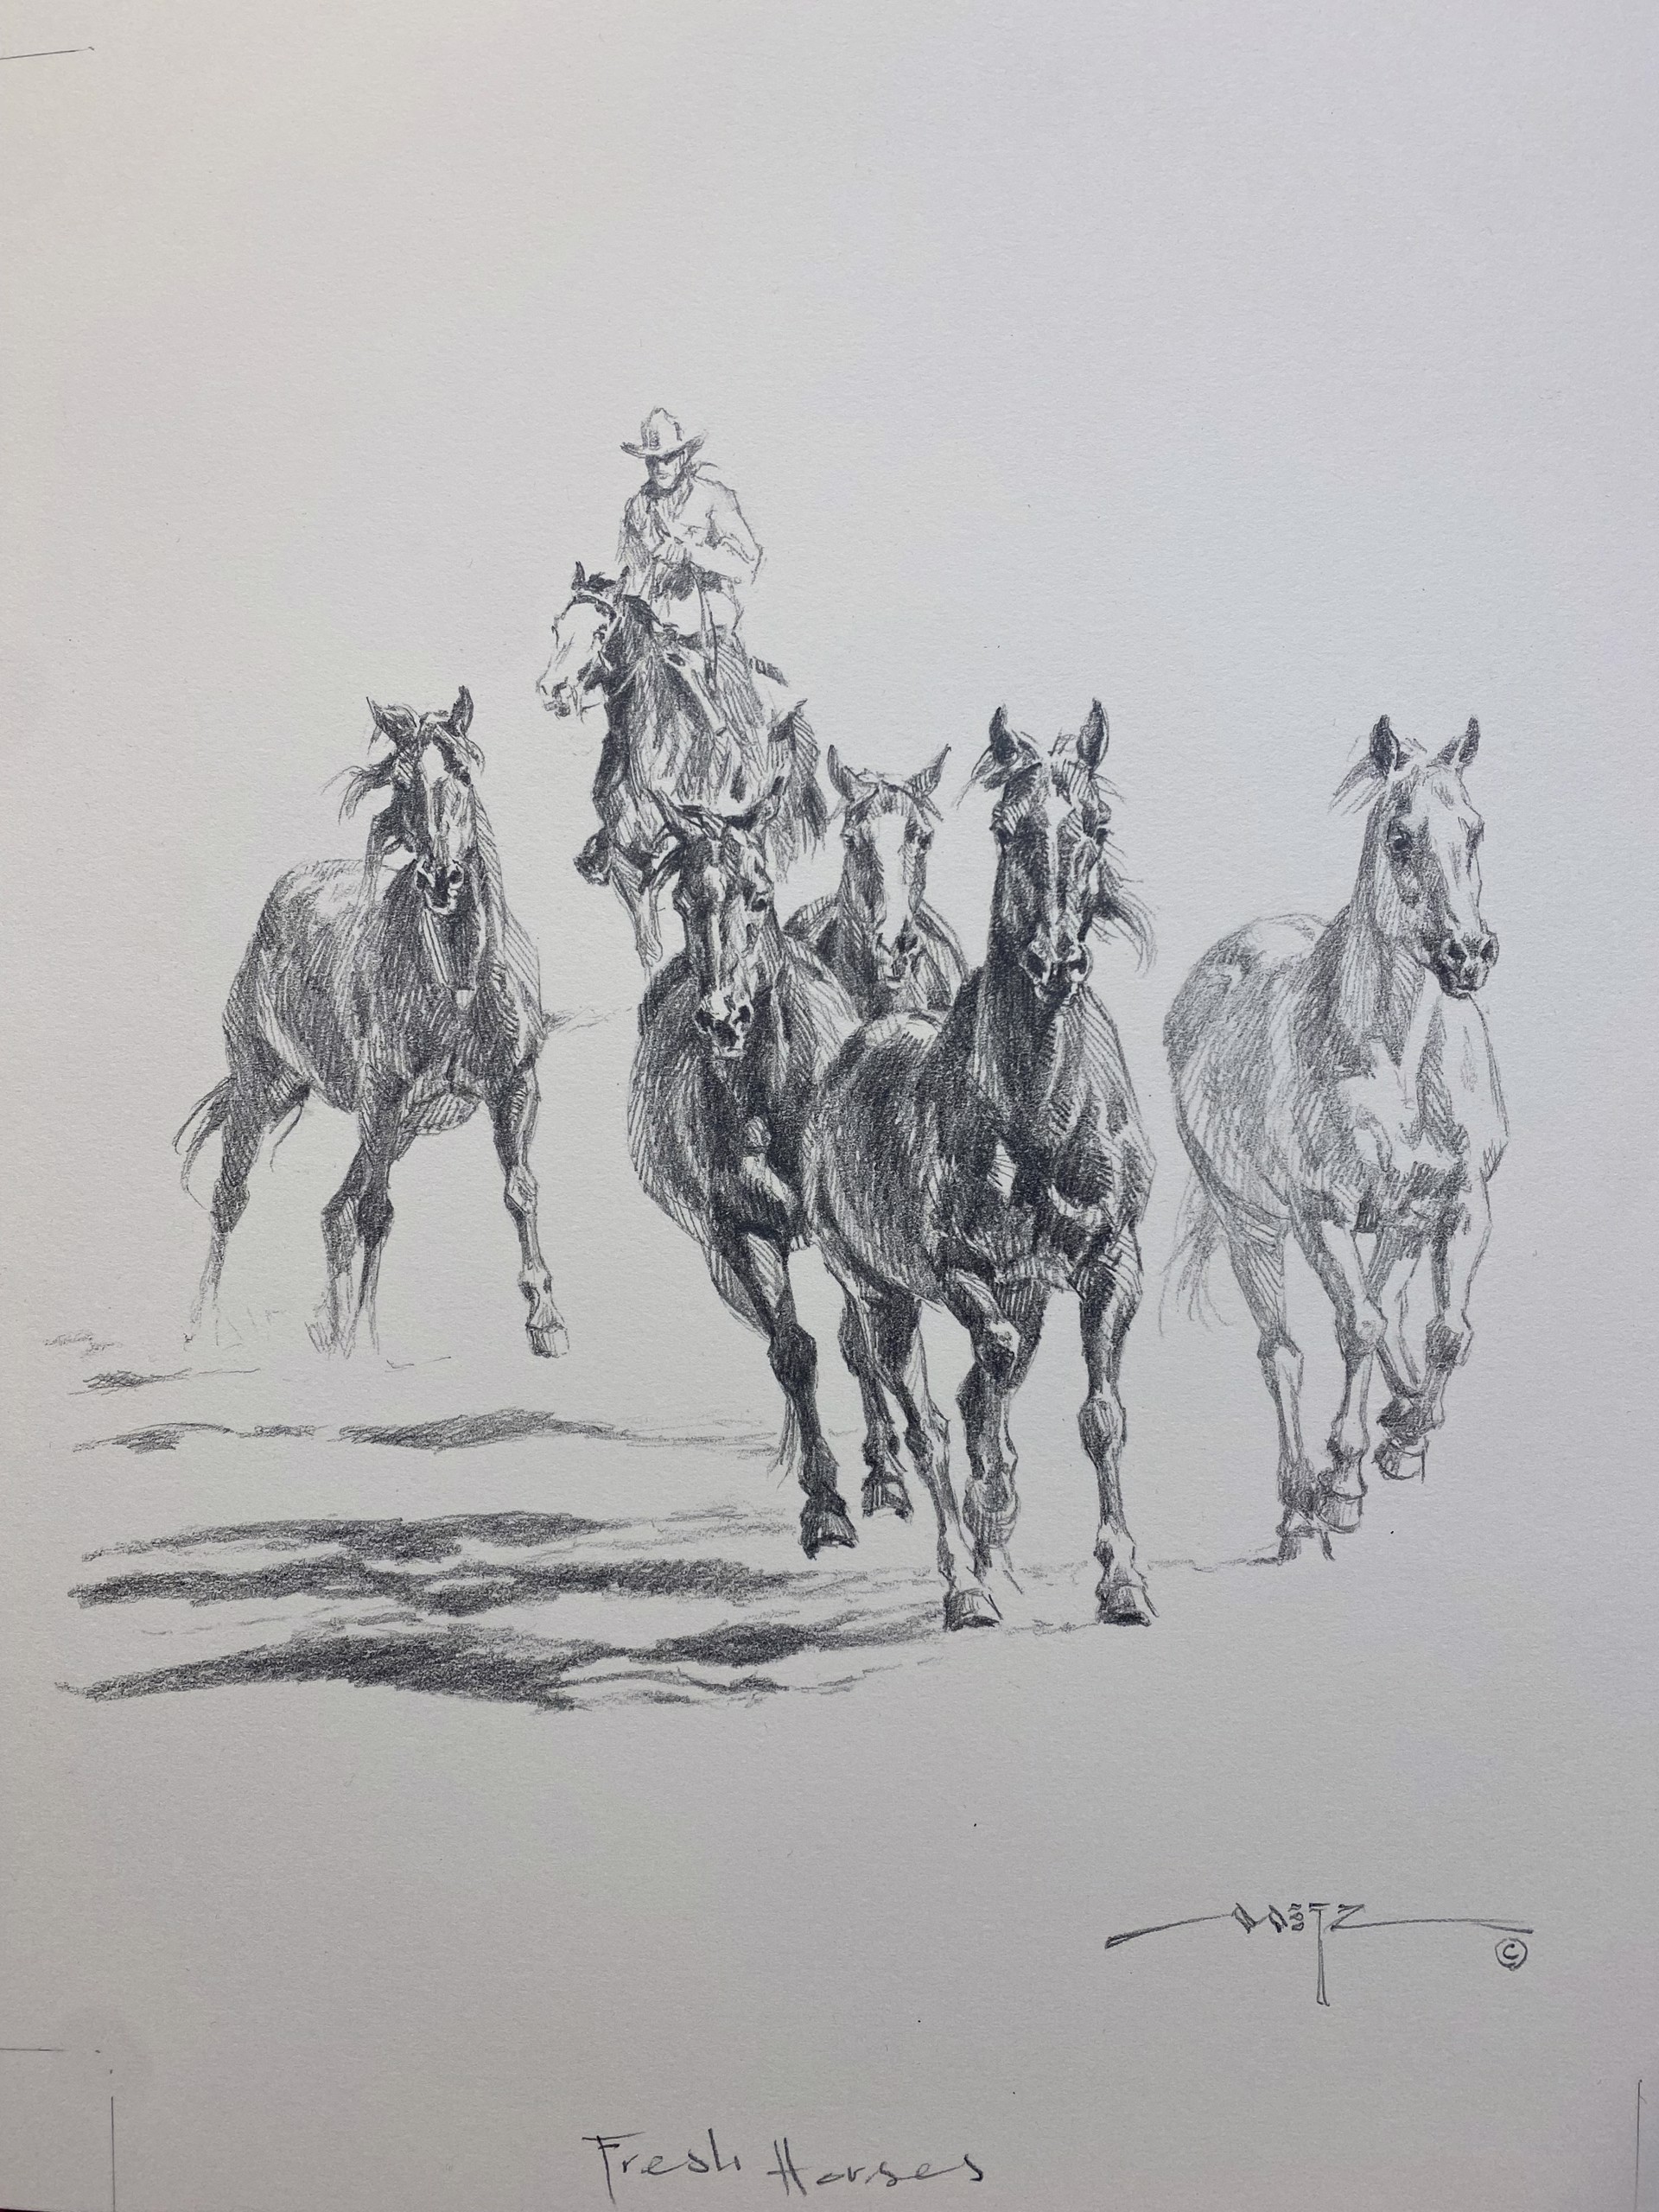 FRESH HORSES by Dan Metz